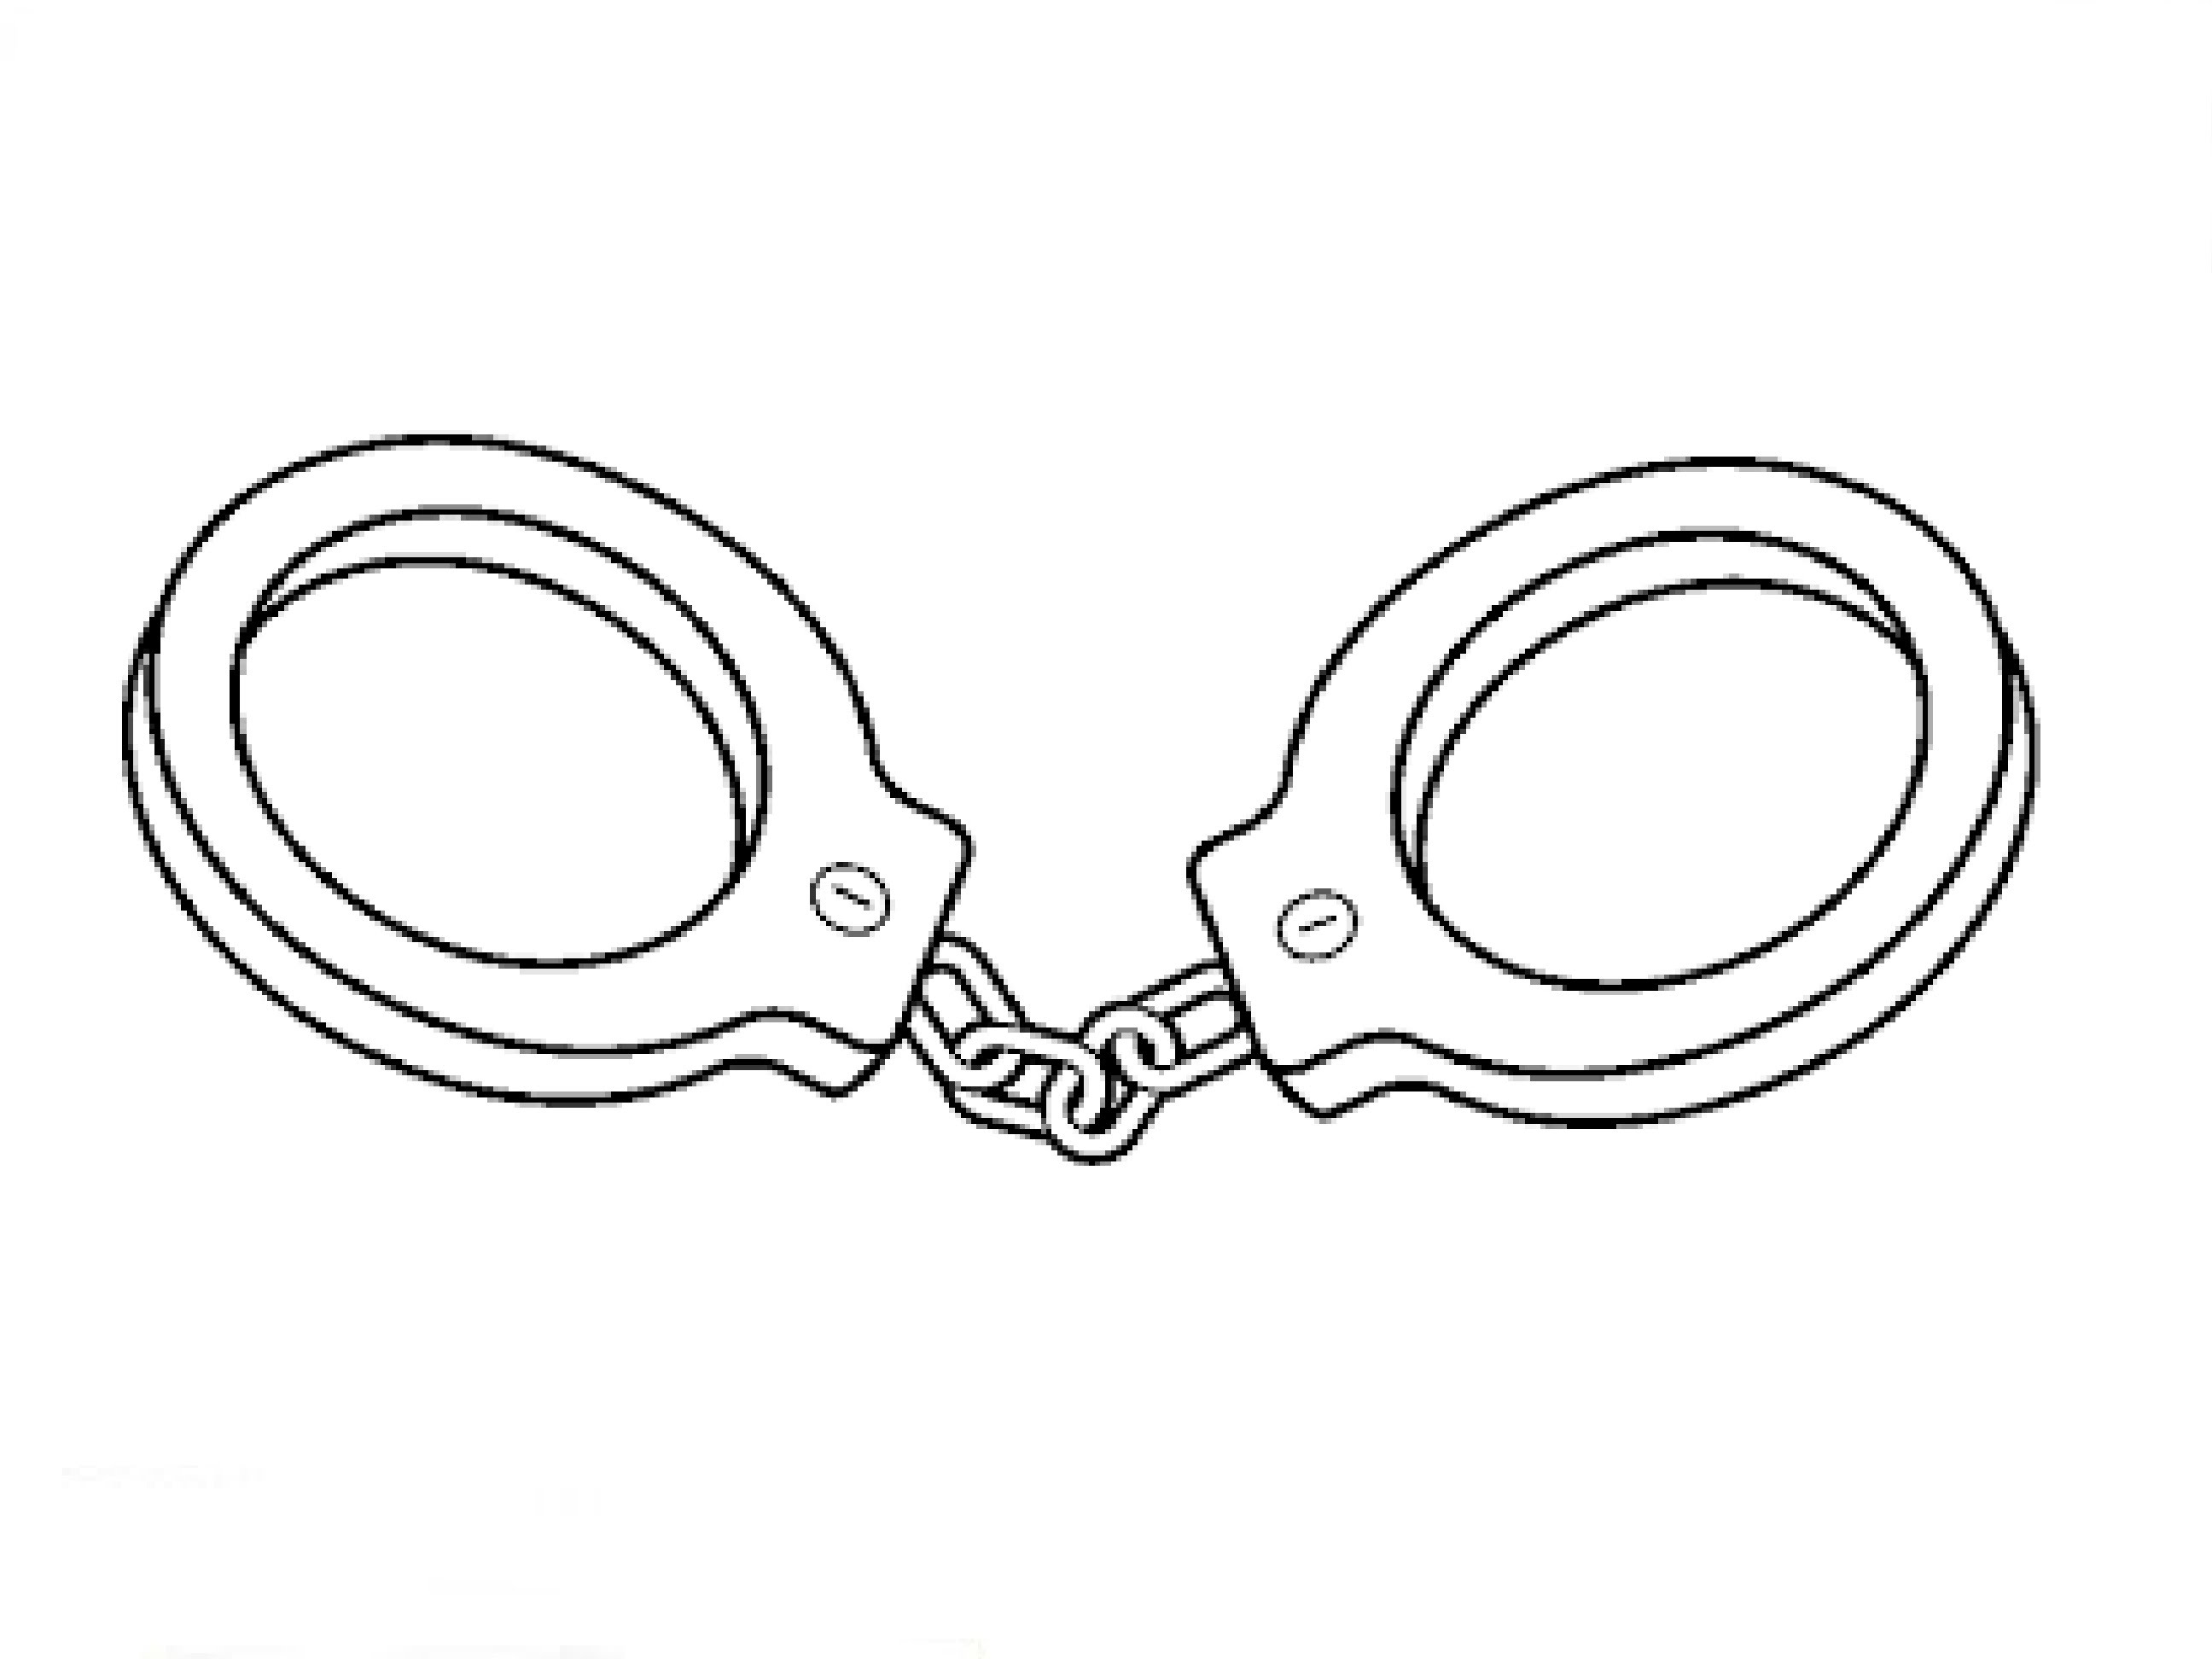 Handcuff illustration: Photo: Youtube